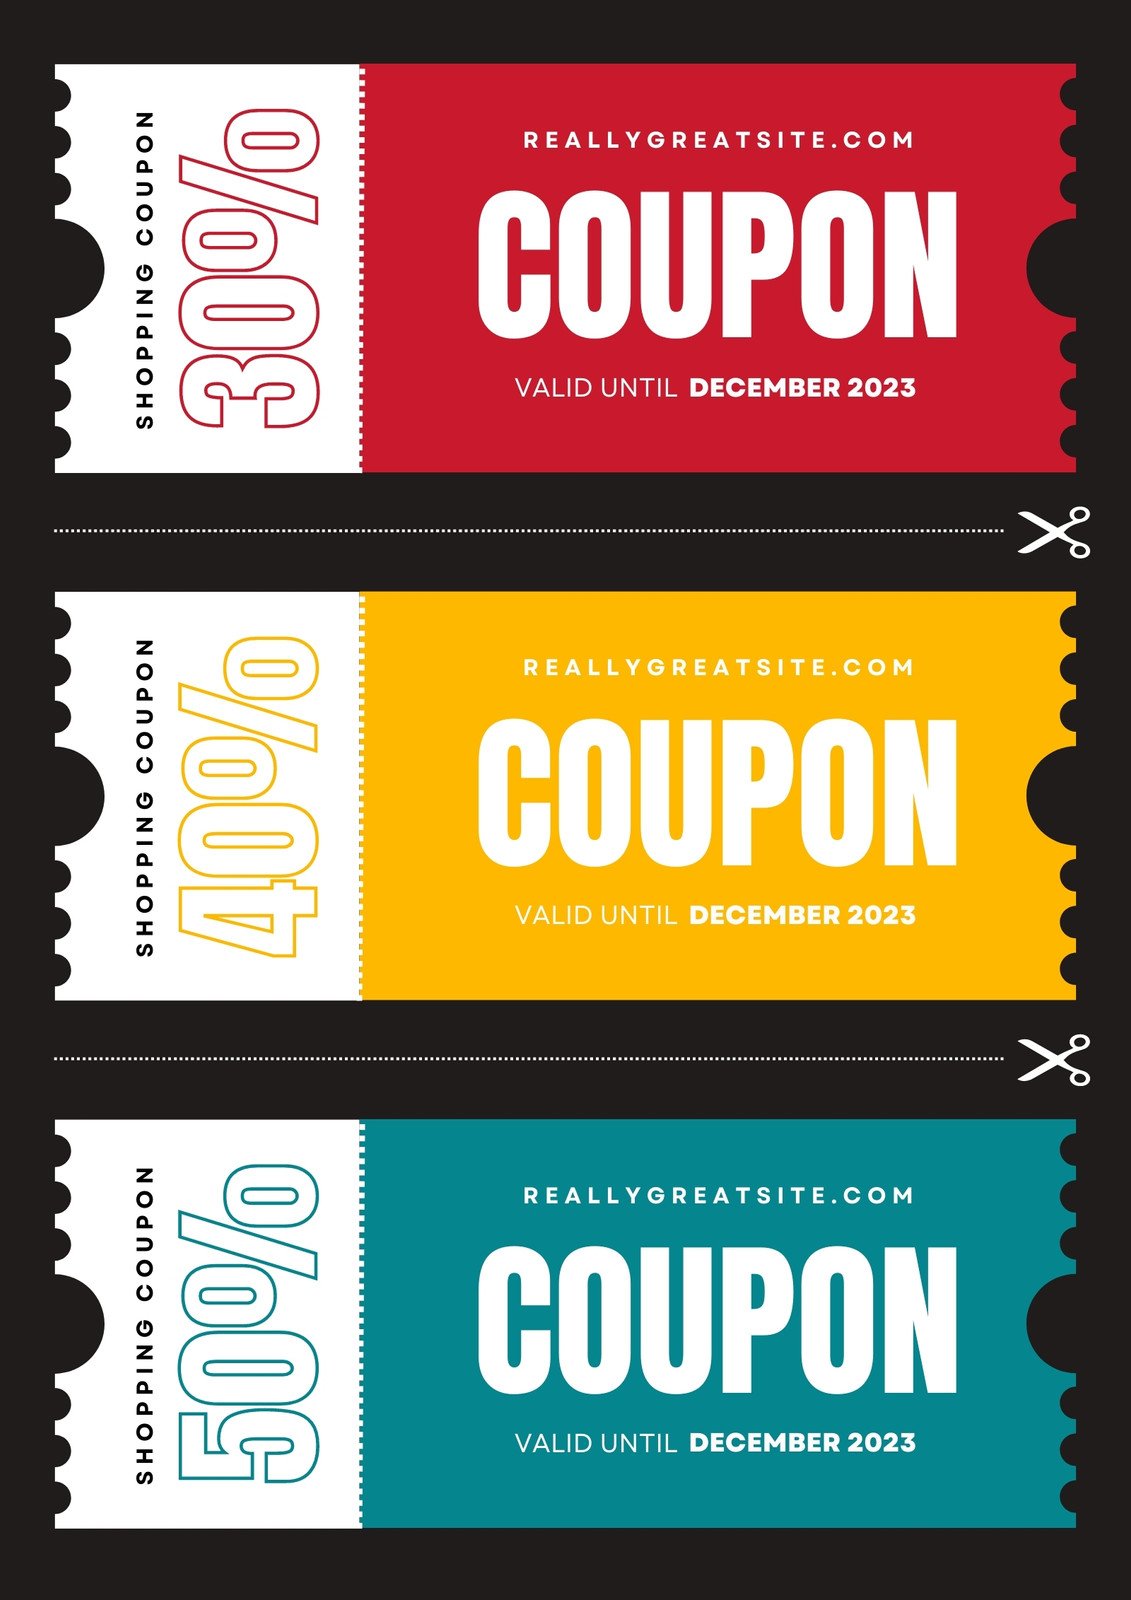 https://marketplace.canva.com/EAFZbgv0Yj0/2/0/1131w/canva-red-yellow-minimalist-shopping-coupon-qg5_fokTeCQ.jpg